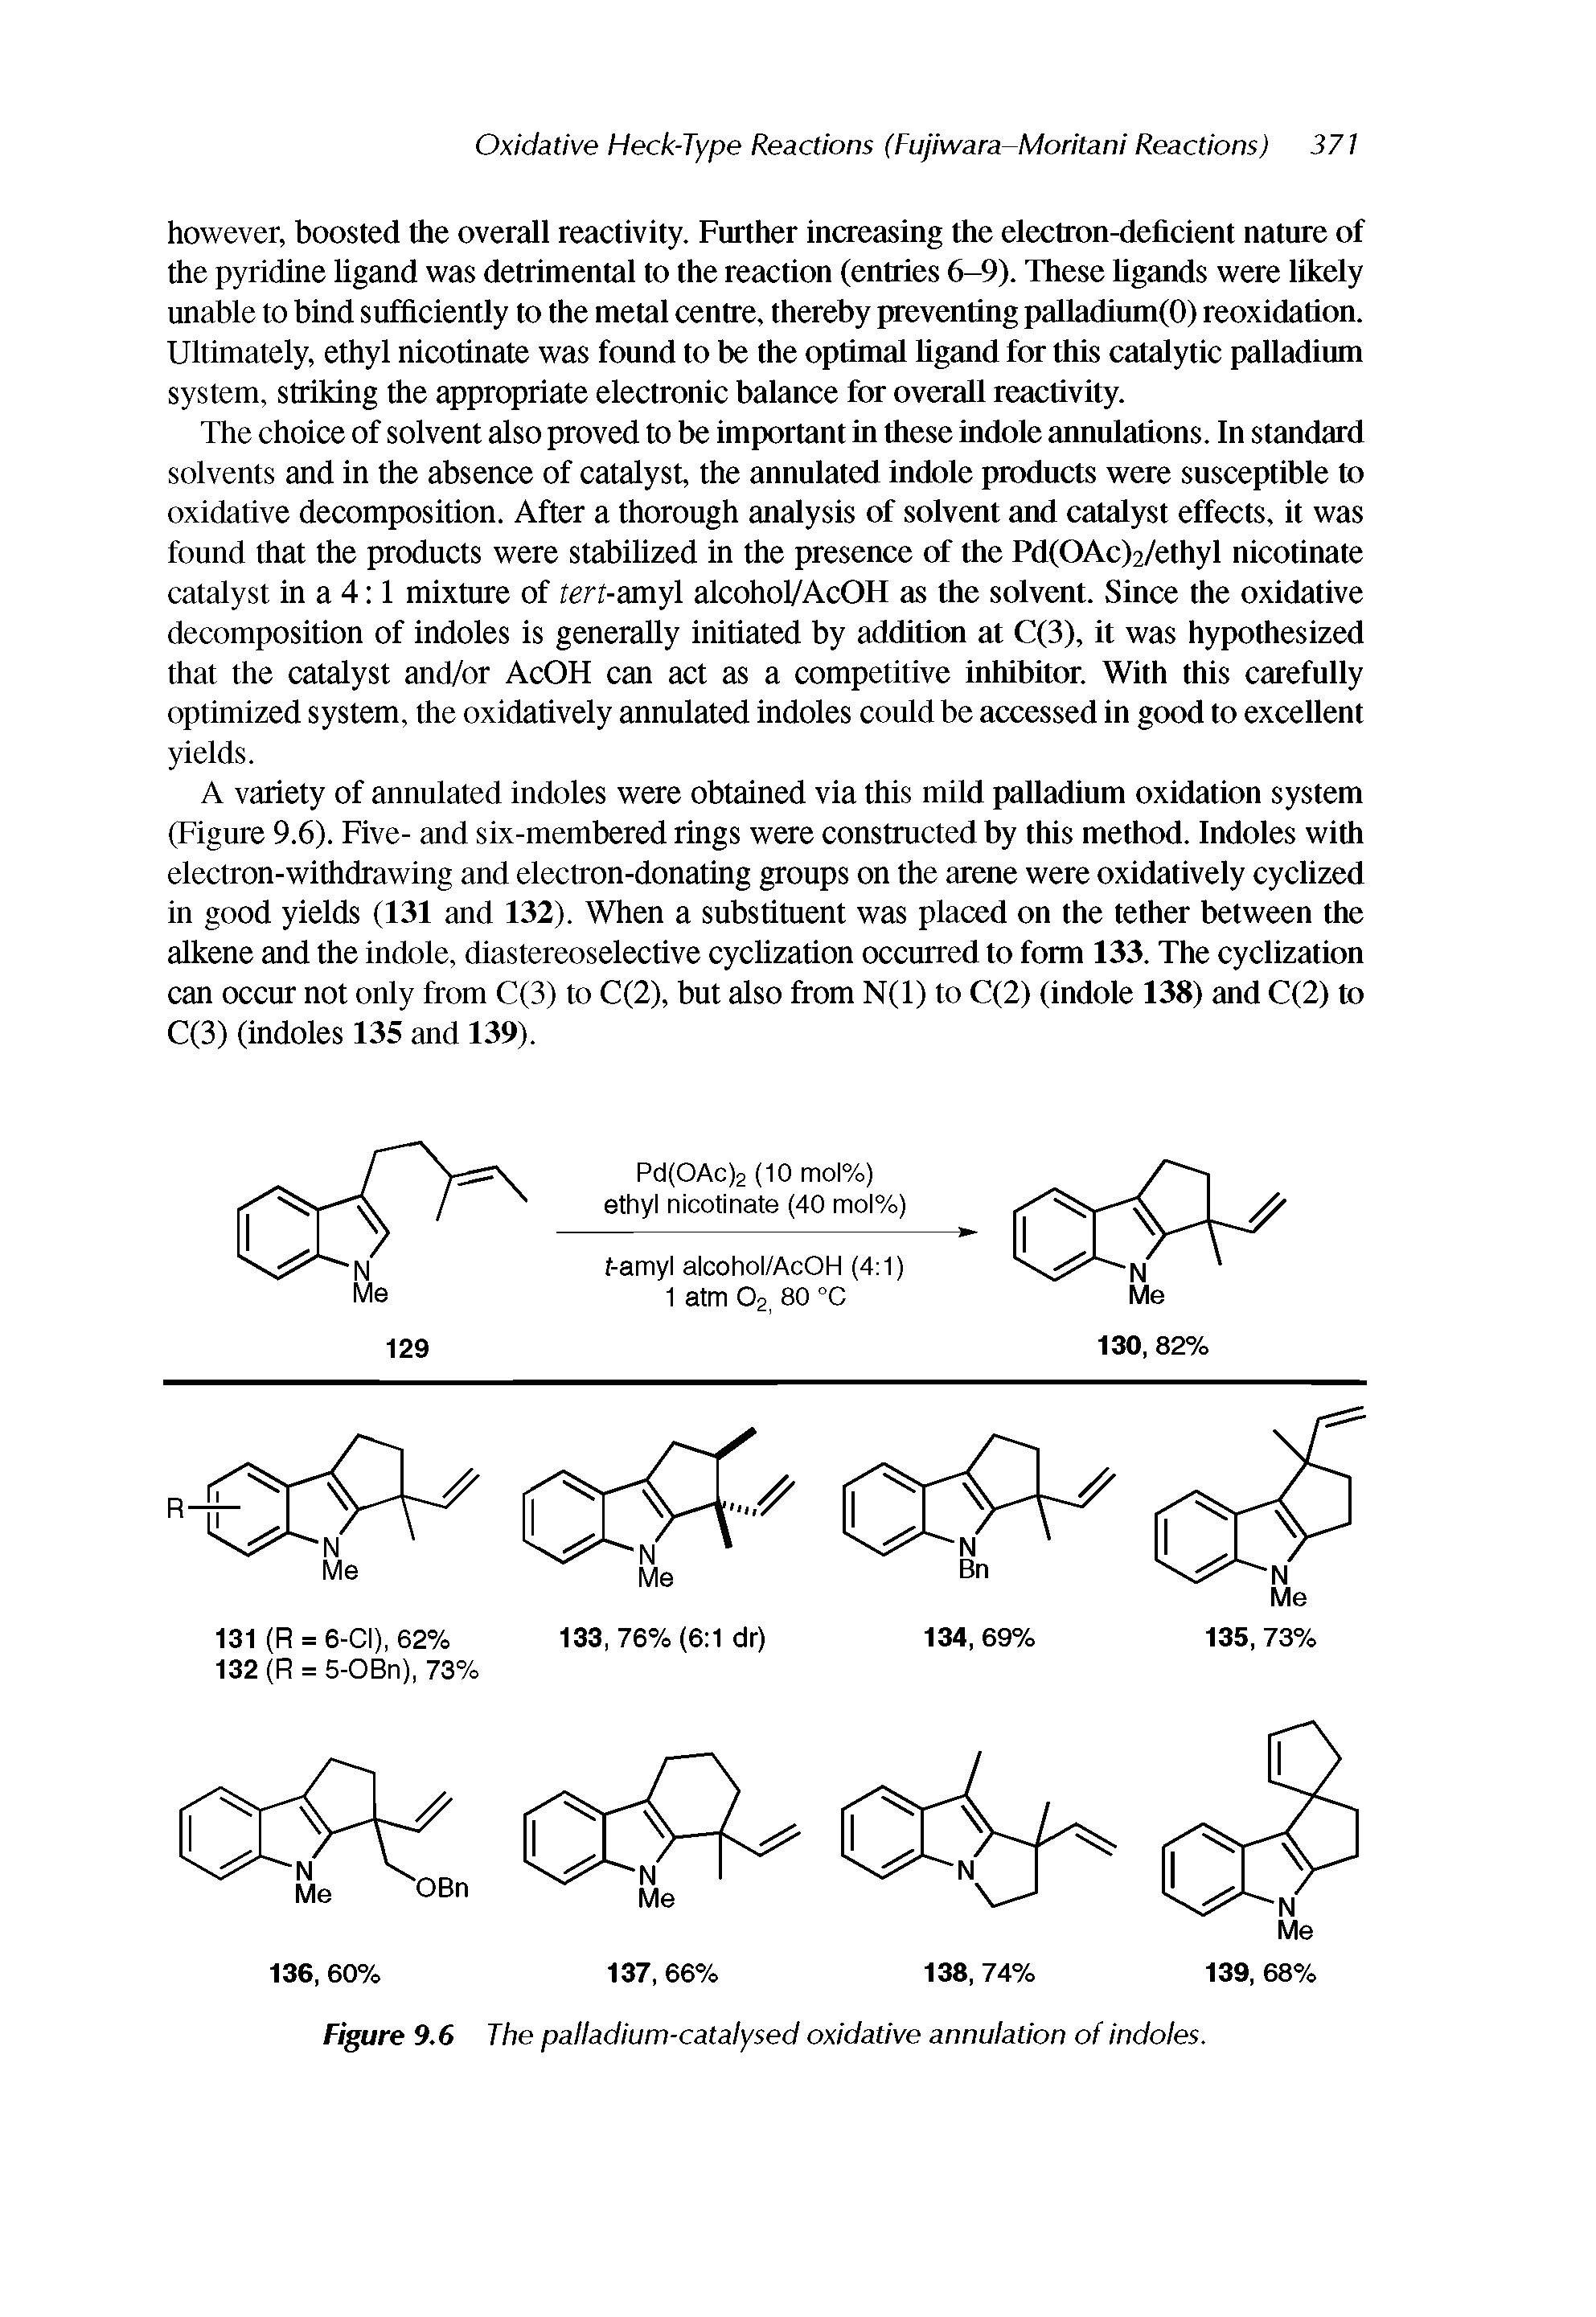 Figure 9.6 The palladium-catalysed oxidative annulation of indoles.